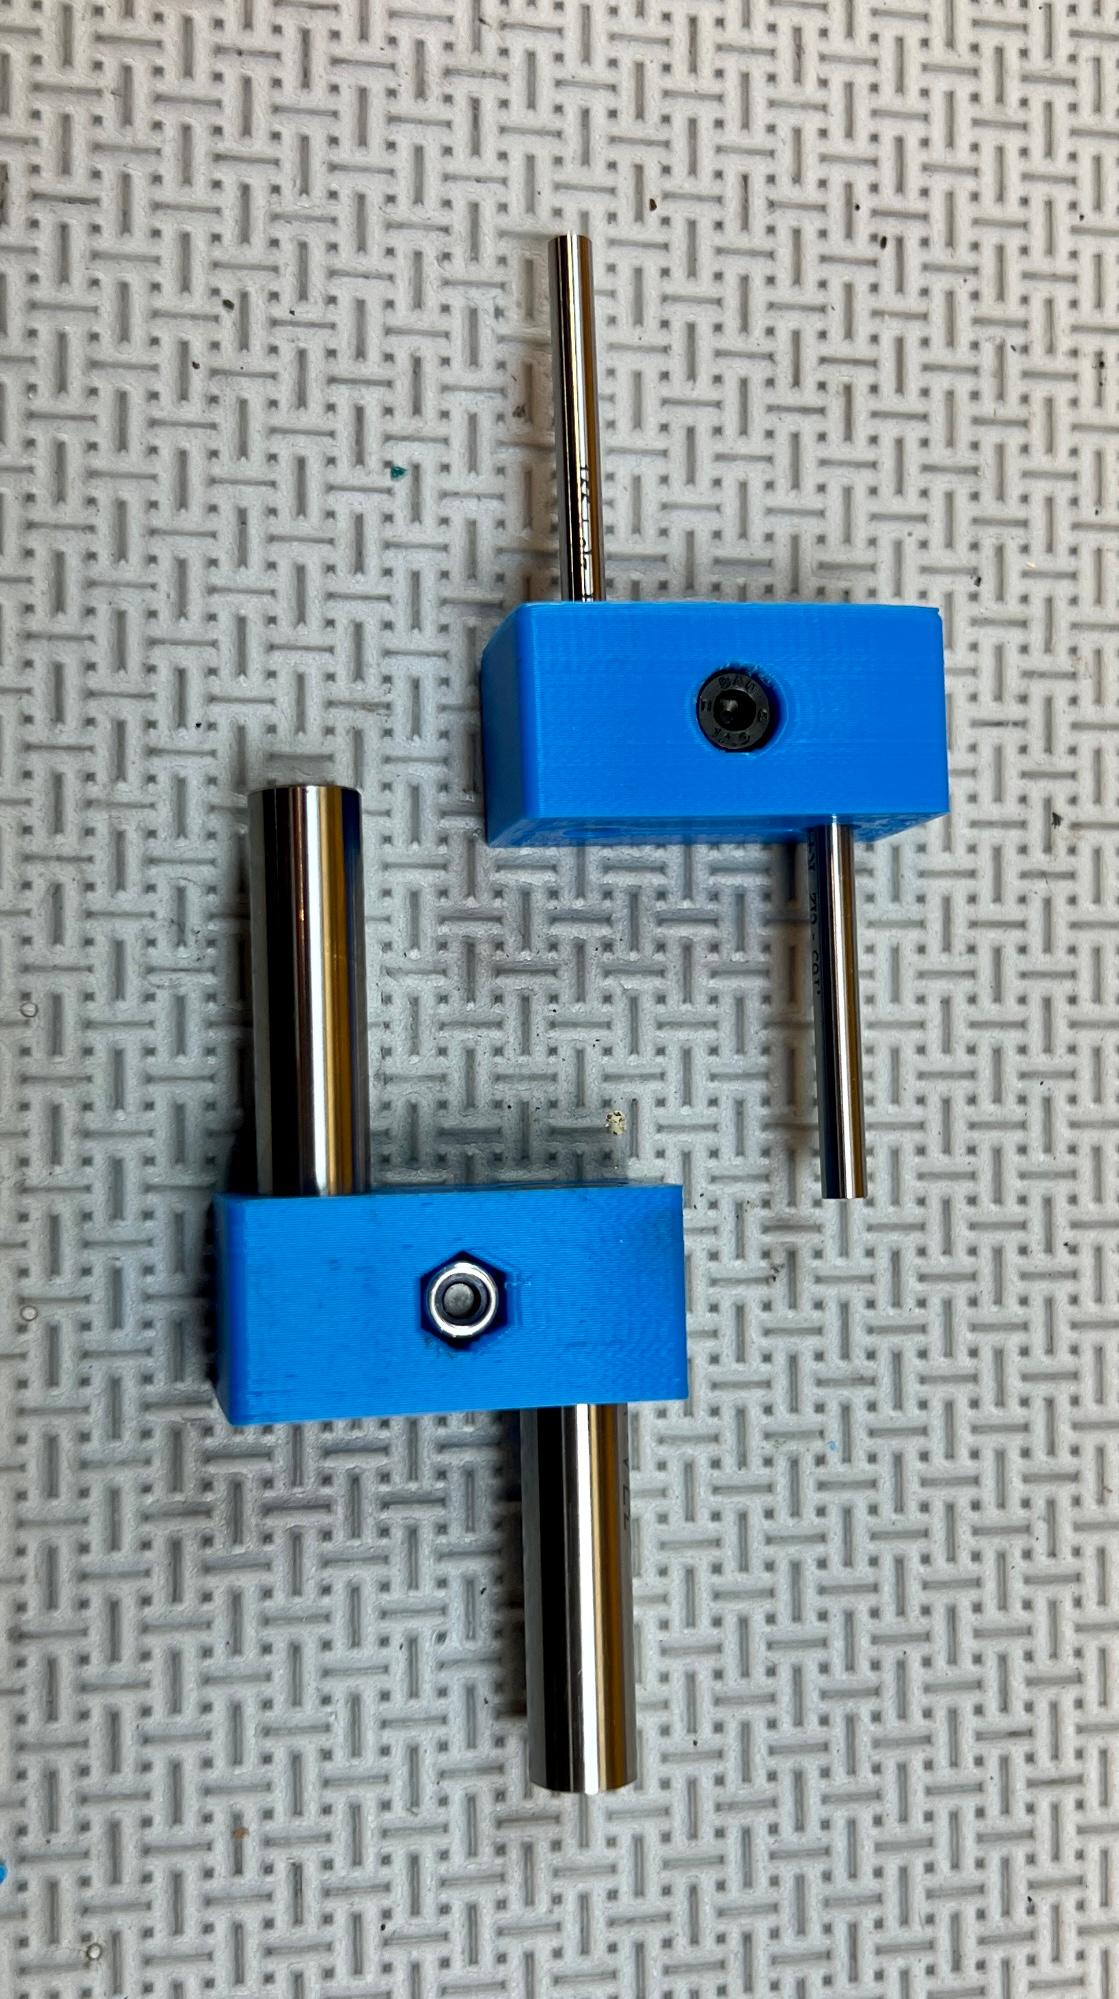 Inexpensive Go/NOGO block - bolt face measurement 3d model